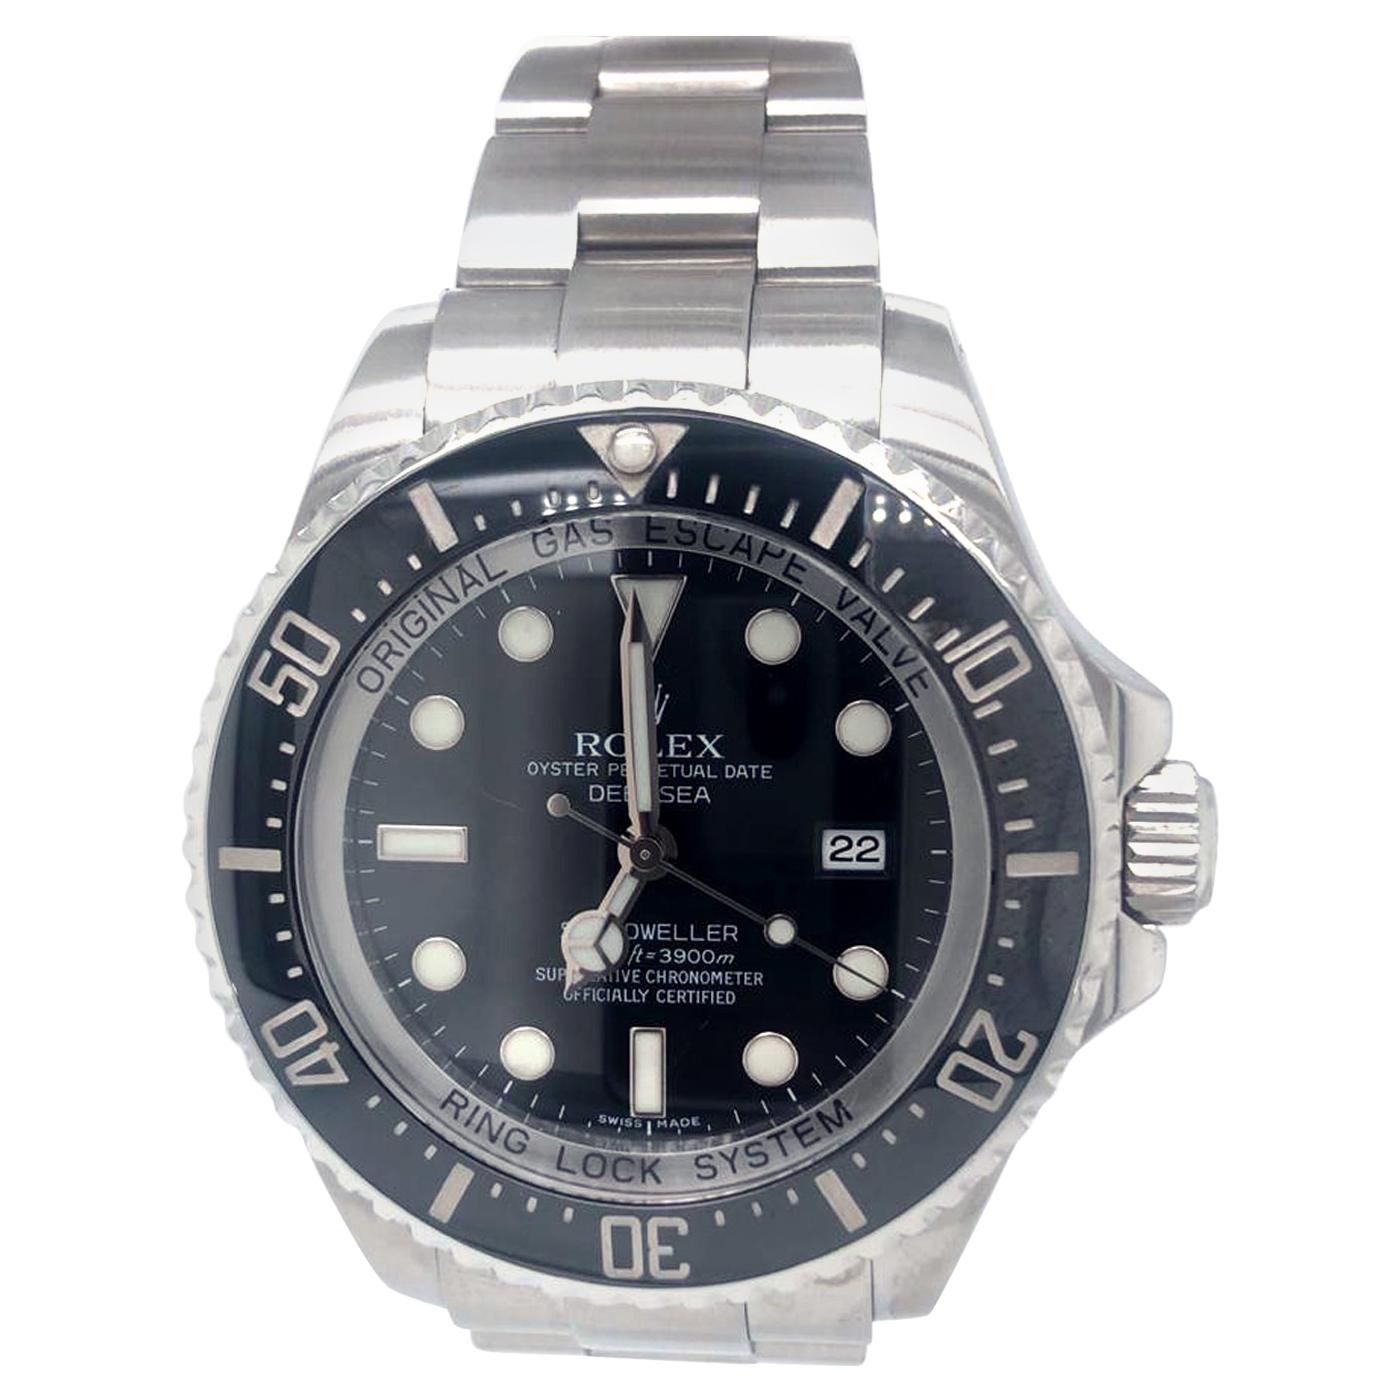 Rolex Deepsea Sea-Dweller 116660 Stainless Steel Black Ceramic Dial Watch